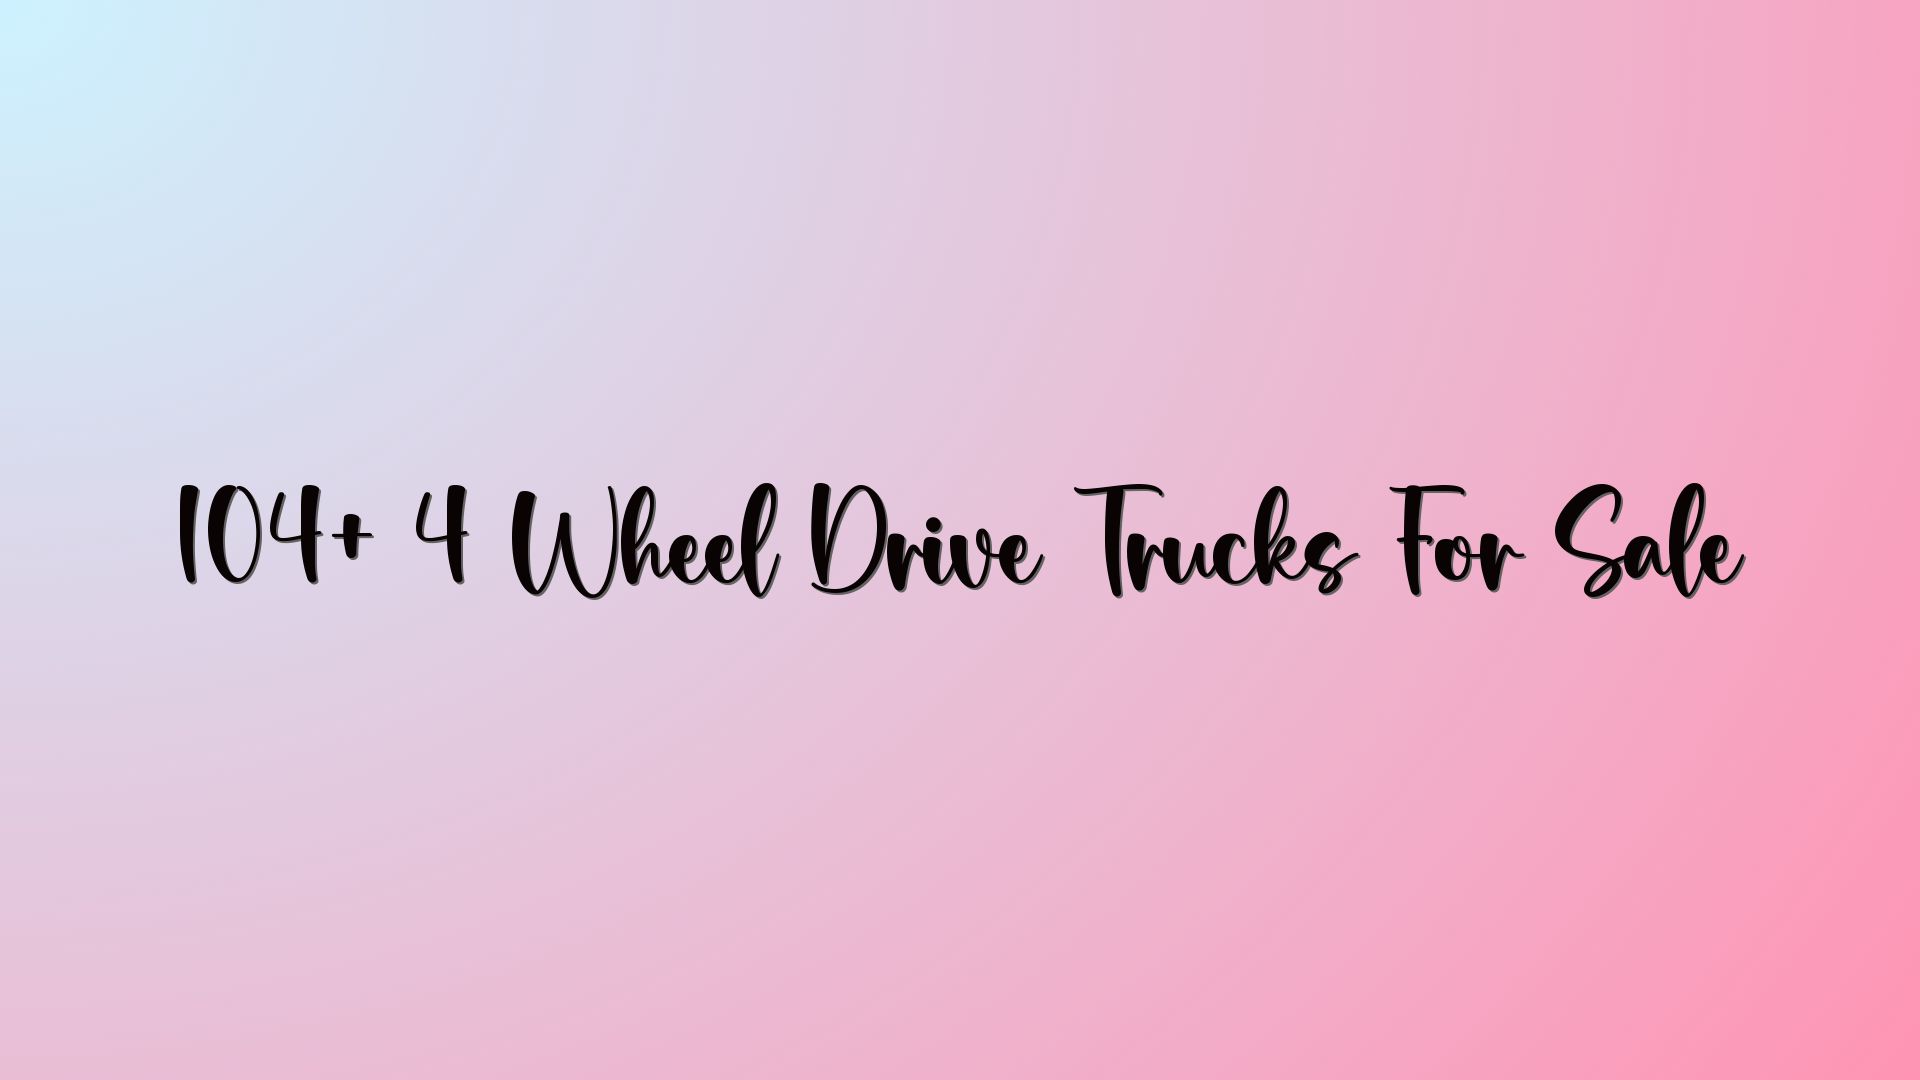 104+ 4 Wheel Drive Trucks For Sale